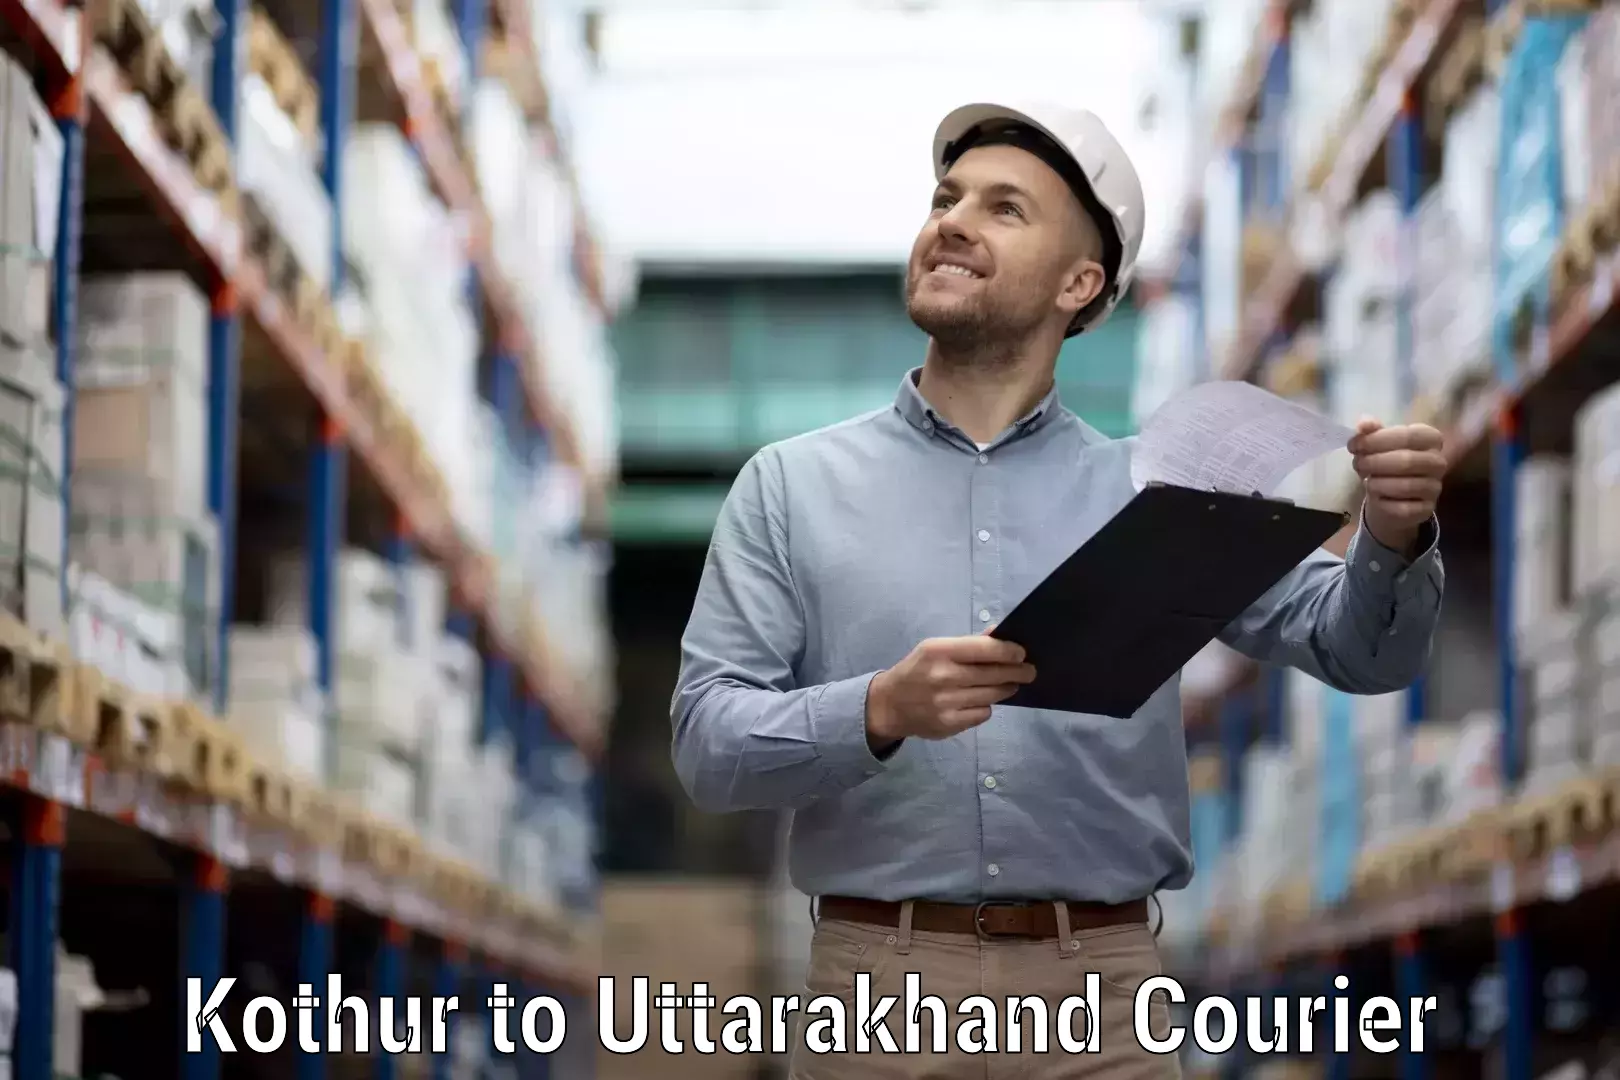 Corporate courier solutions Kothur to Dehradun